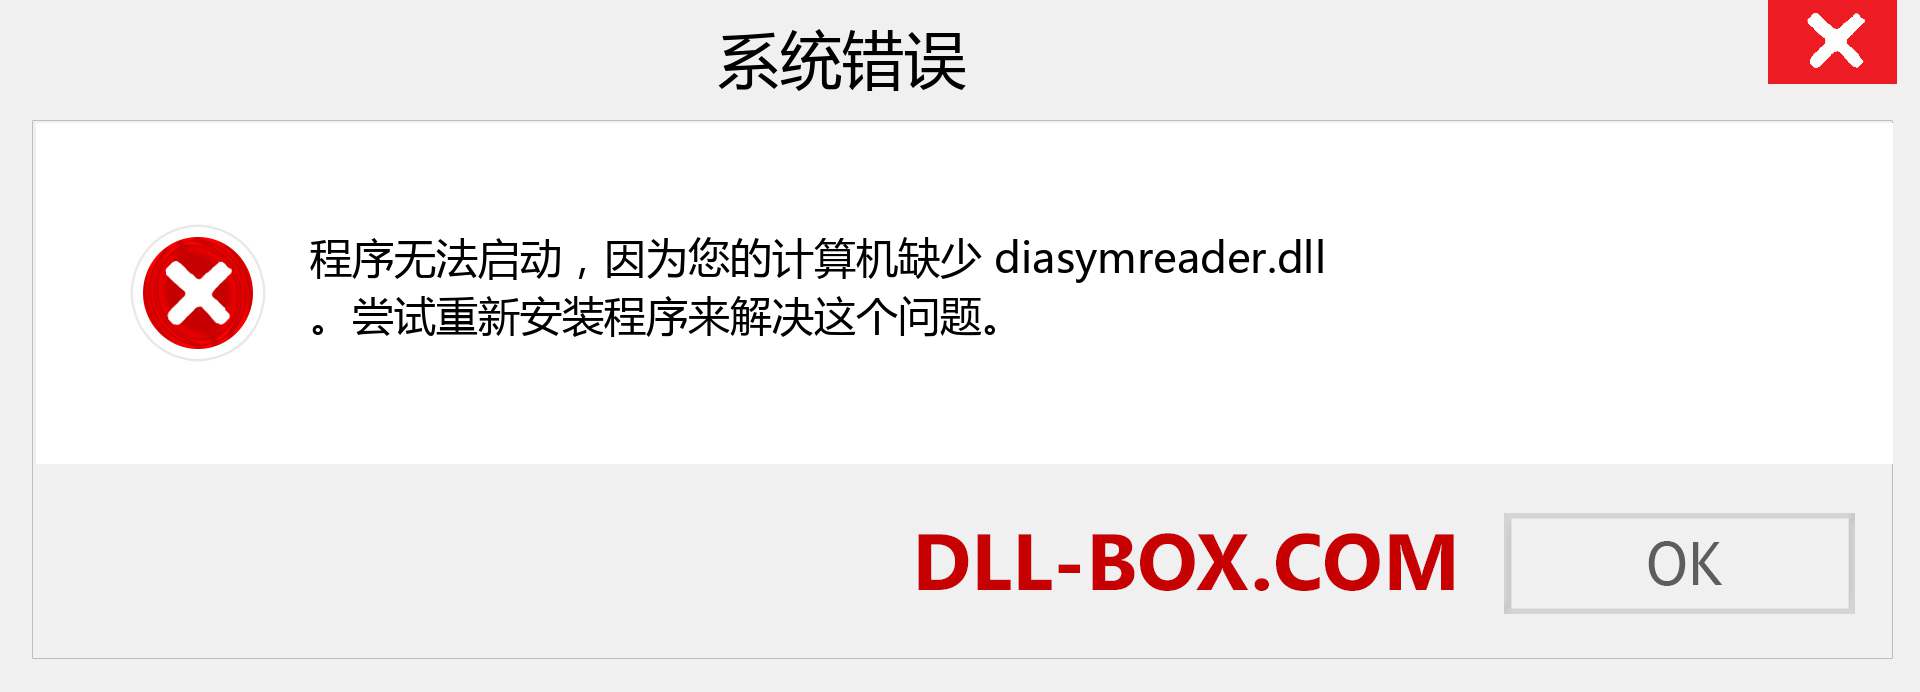 diasymreader.dll 文件丢失？。 适用于 Windows 7、8、10 的下载 - 修复 Windows、照片、图像上的 diasymreader dll 丢失错误